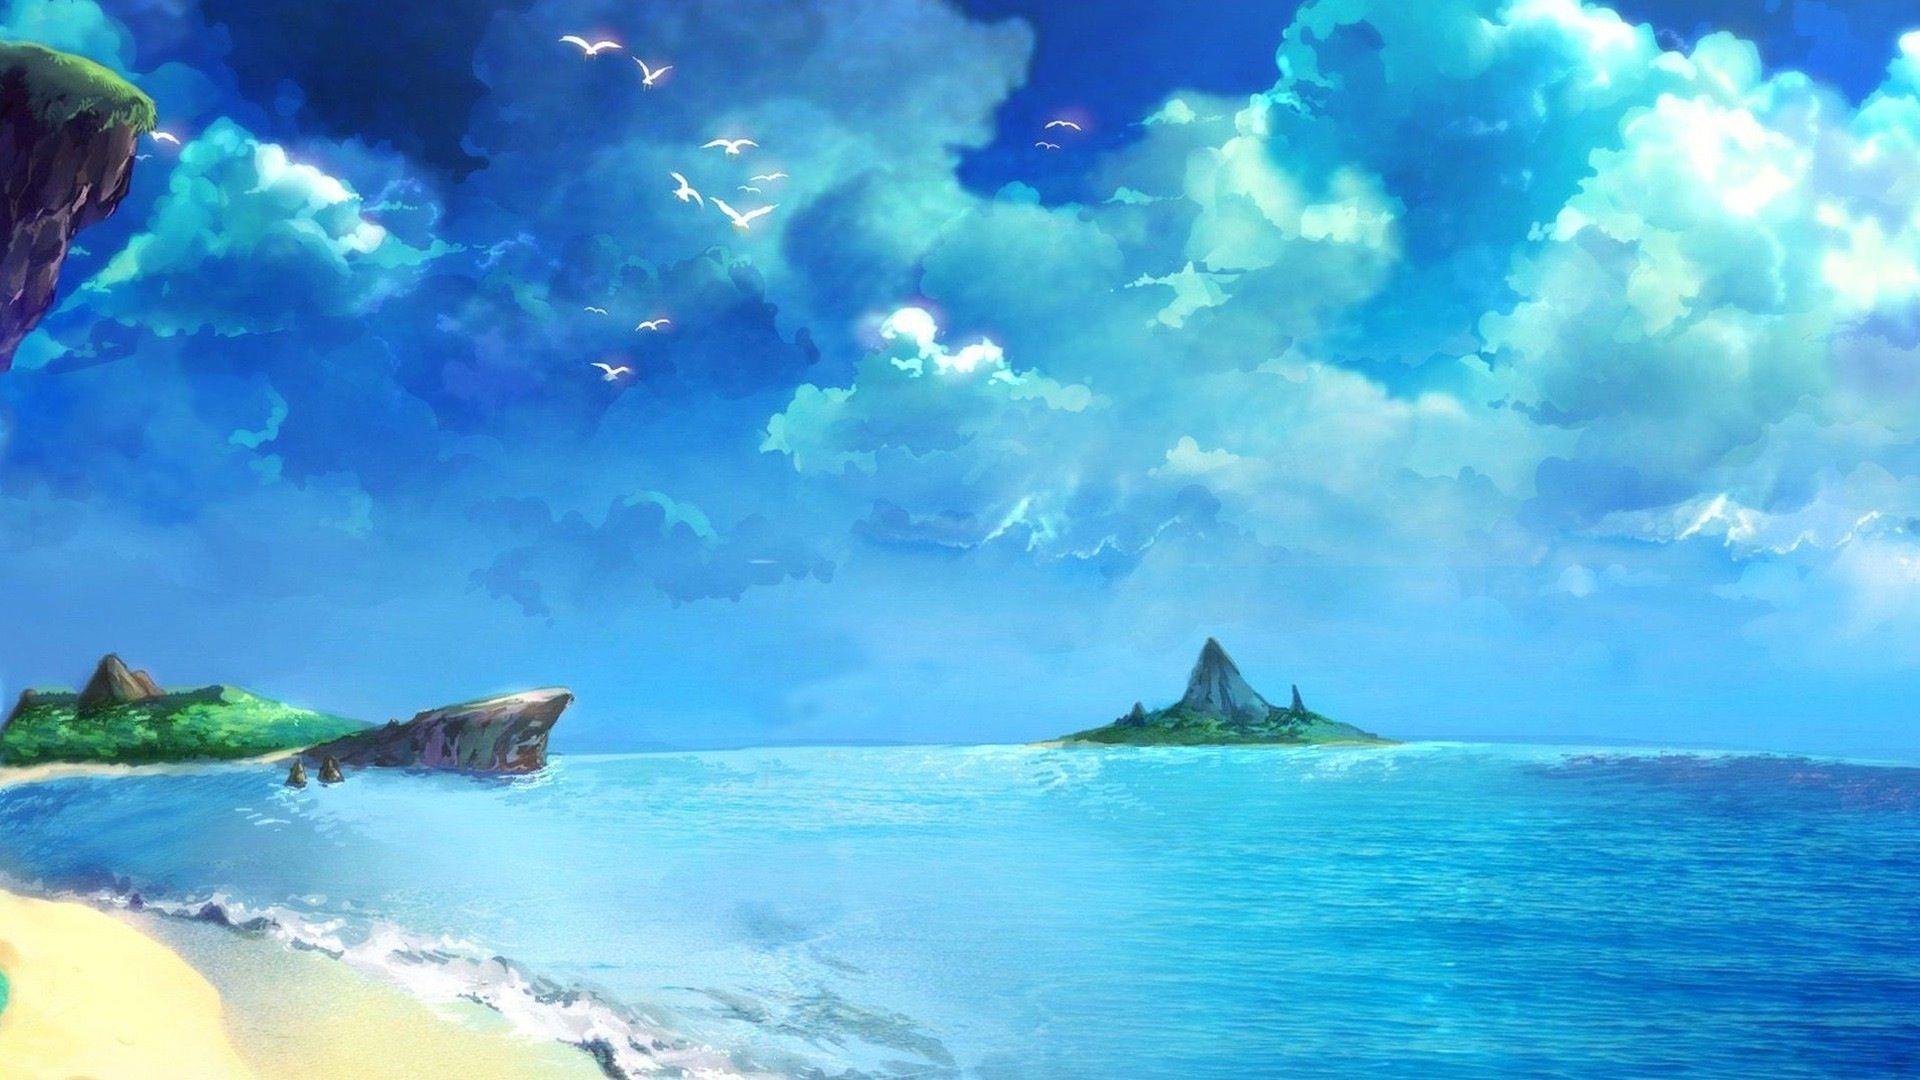 Anime Beach Scenery Wallpapers Top Free Anime Beach Scenery Backgrounds Wallpaperaccess